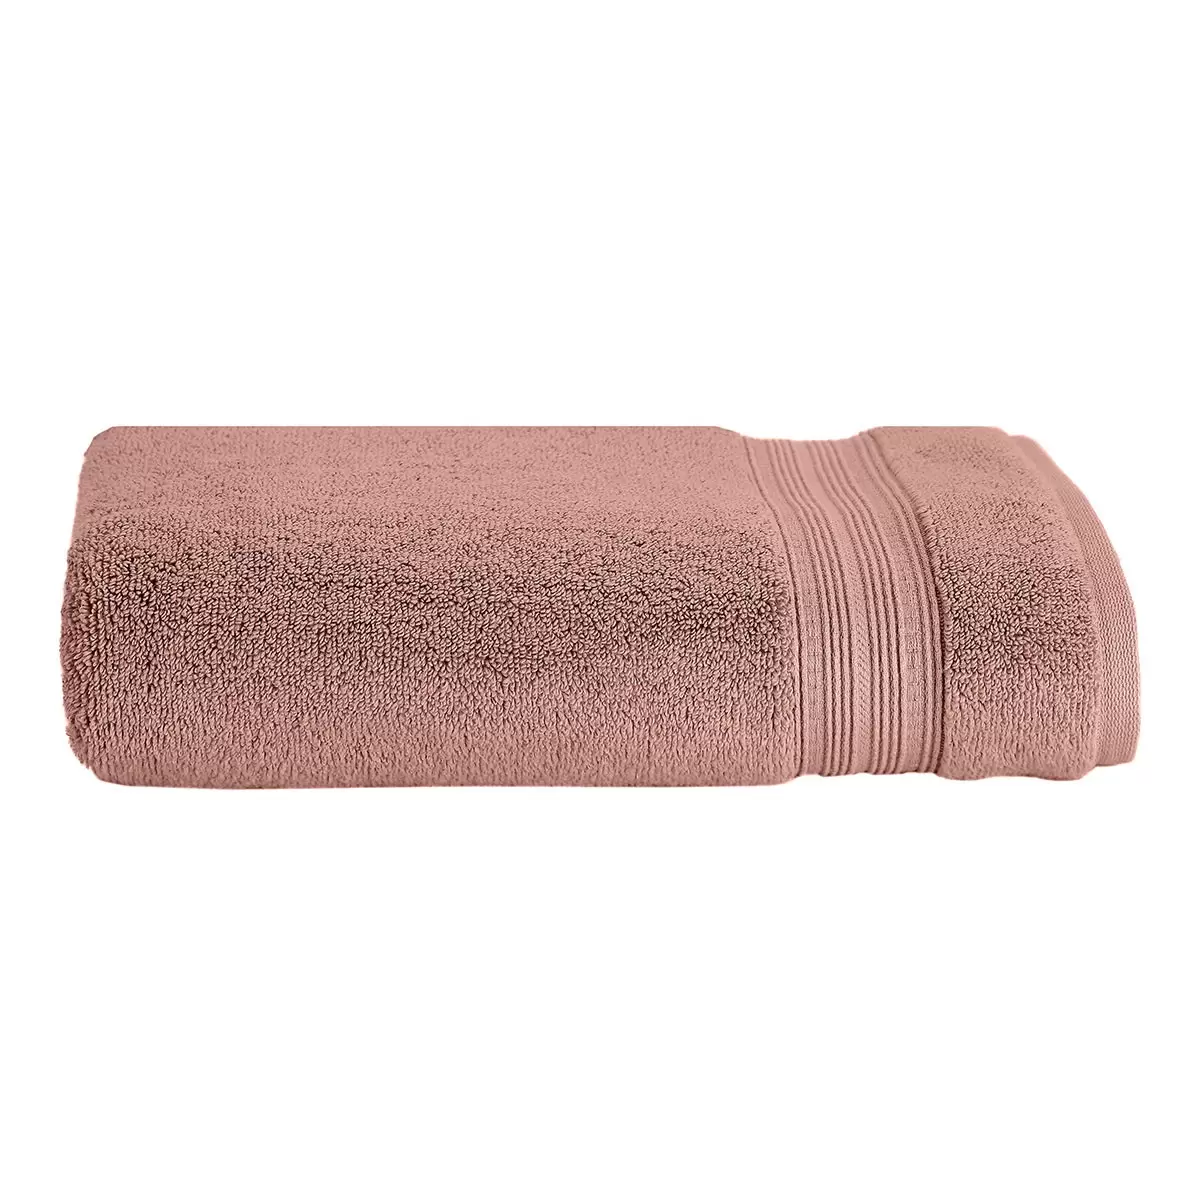 Grandeur 印度低捻純棉浴巾 76公分 X 147 公分 粉色